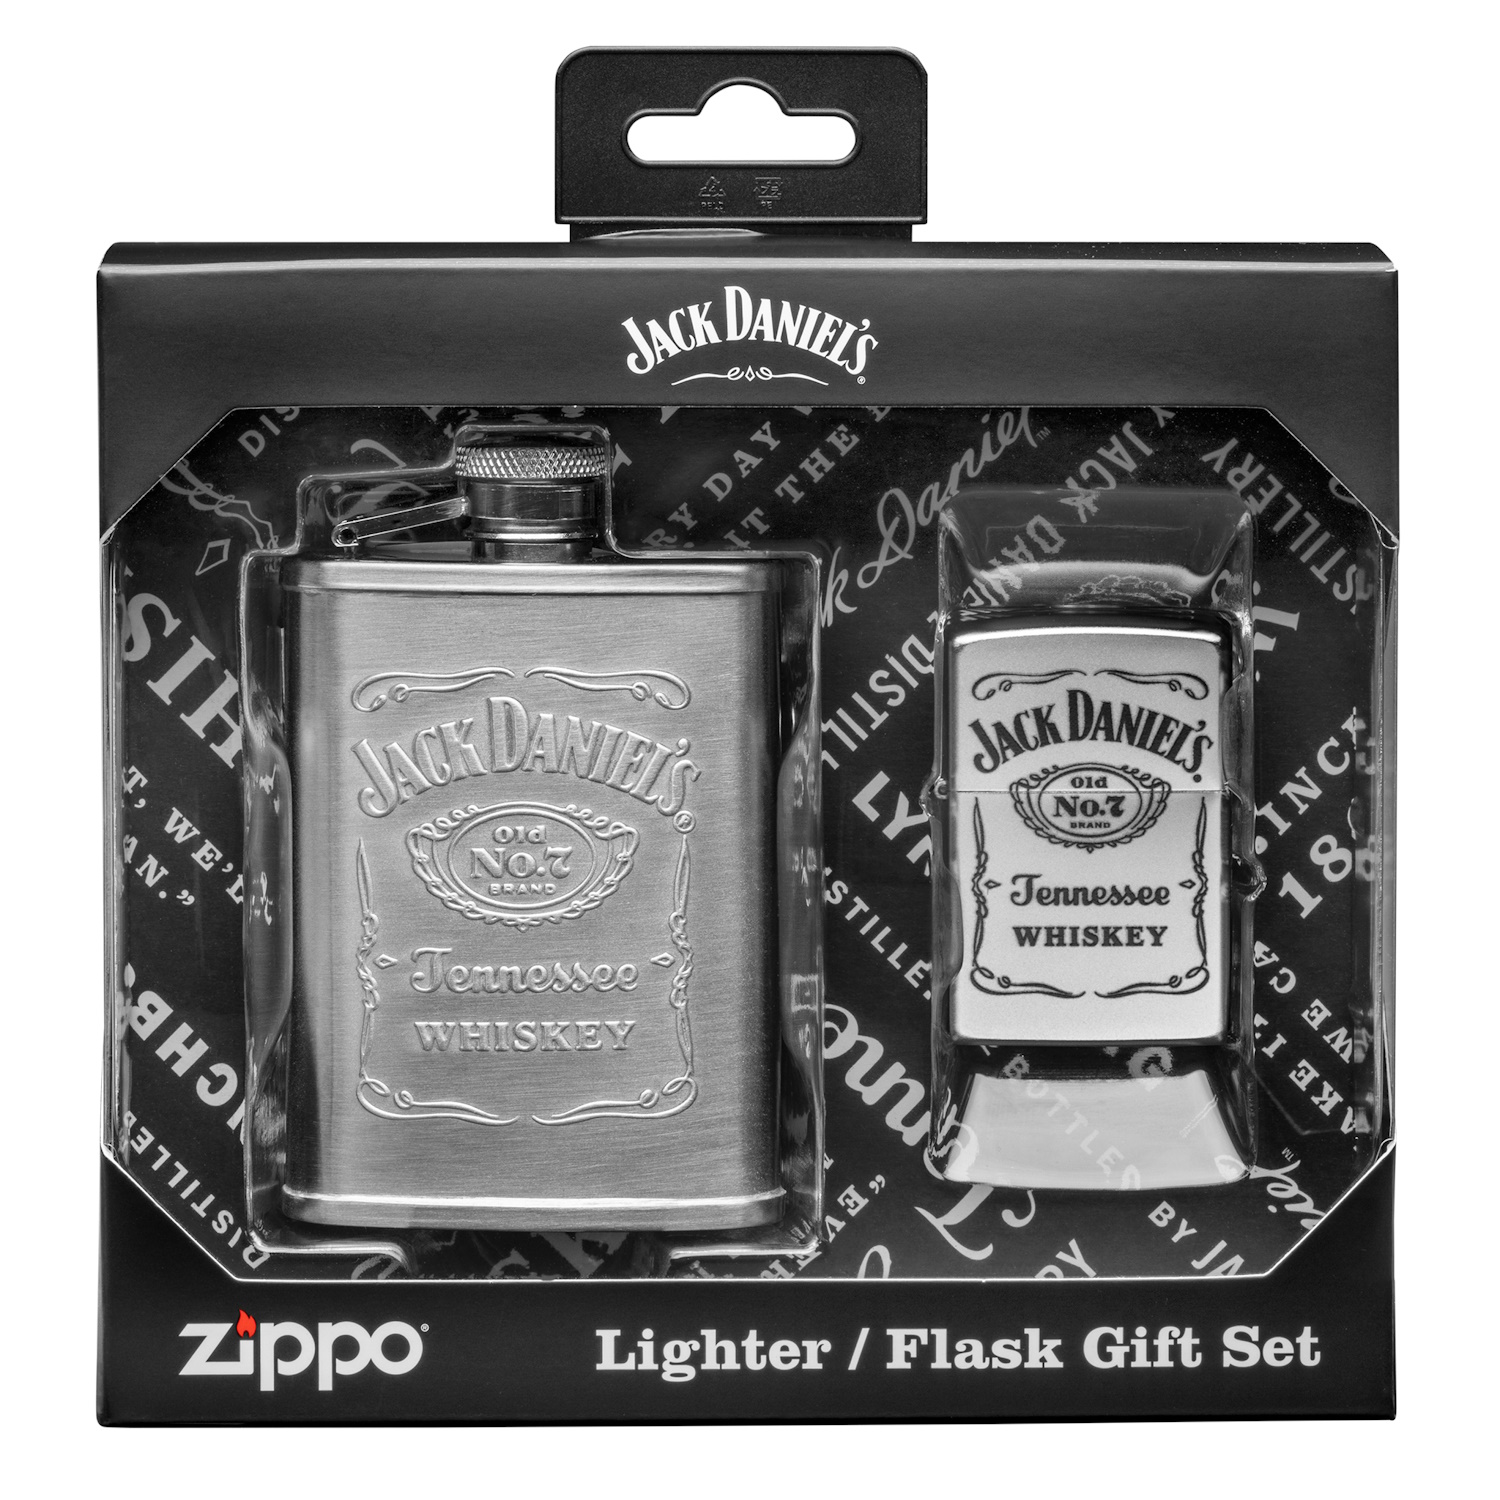 Zippo Jack Daniels and Flask Gift Set